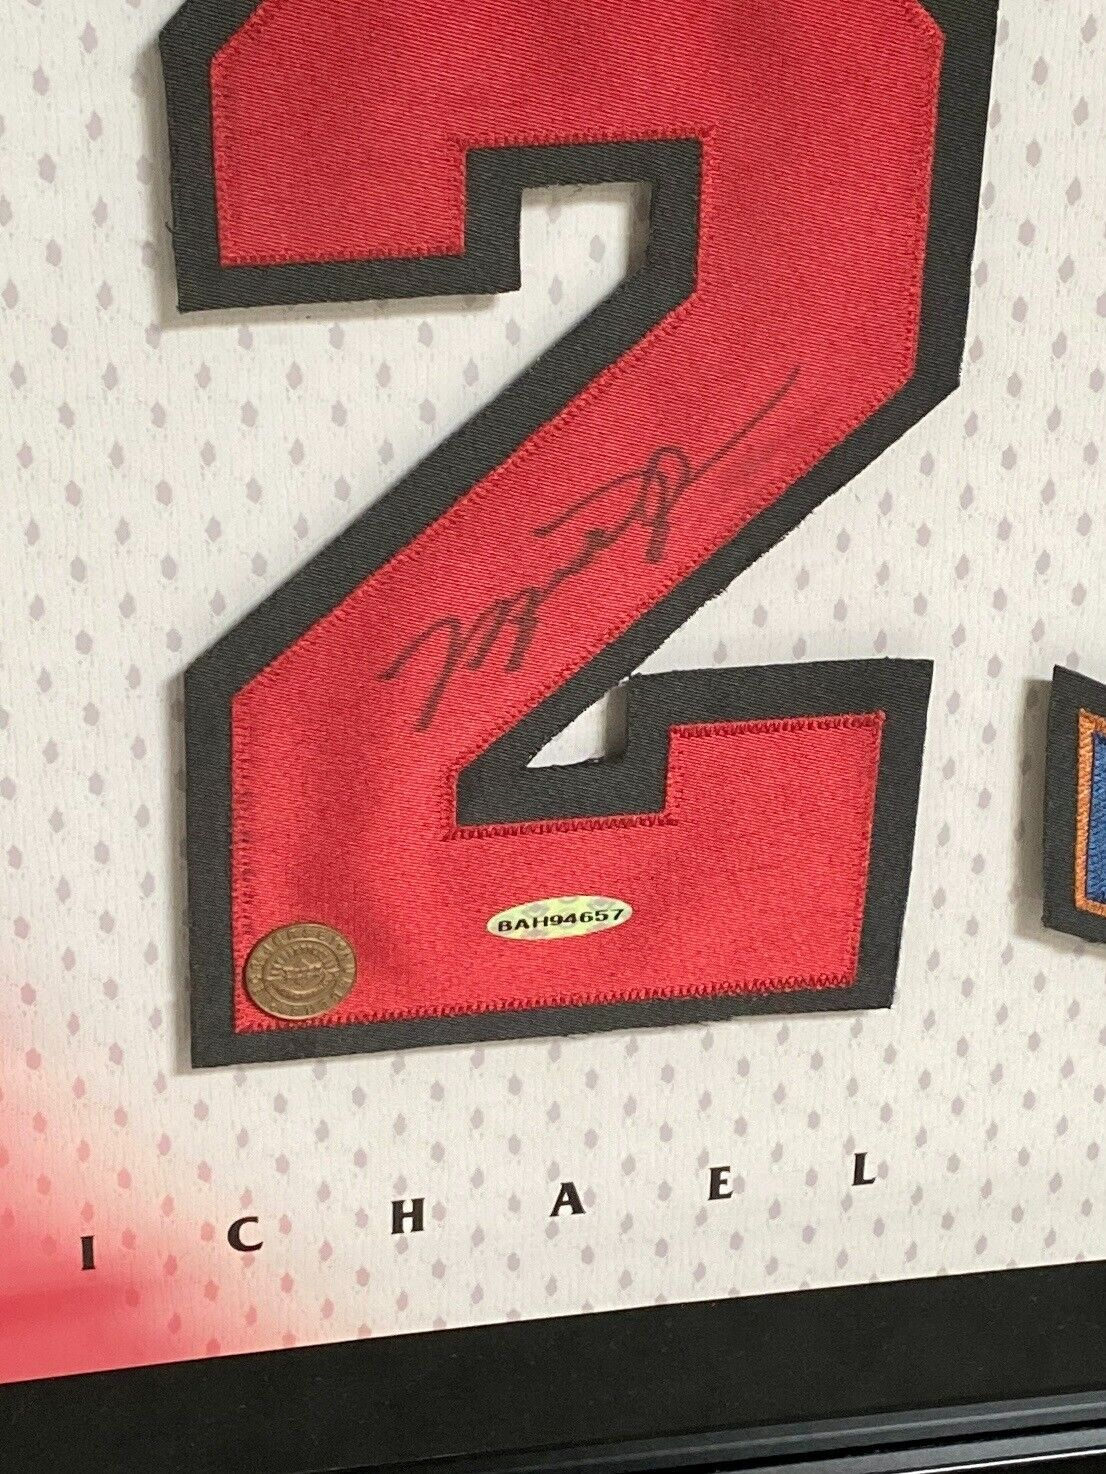 Michael Jordan Signed Jersey Numbers #23 Display Upper Deck UDA